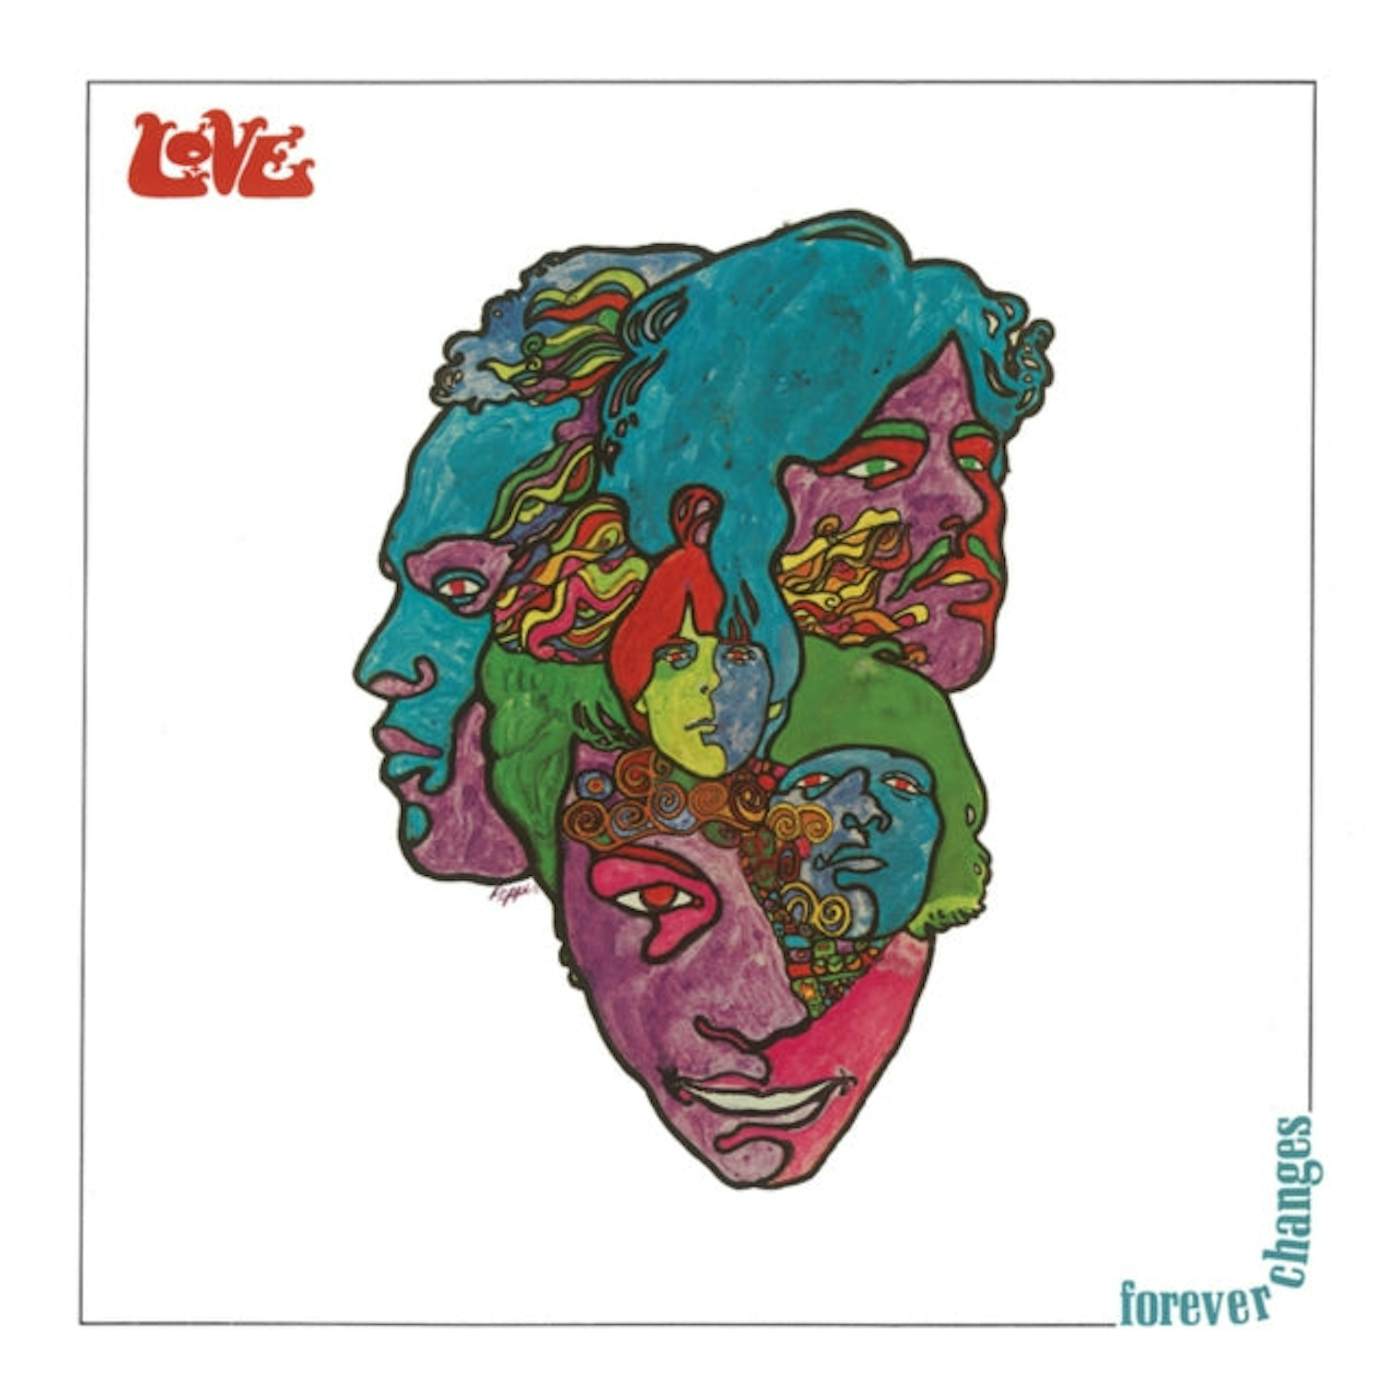 Love LP Vinyl Record - Forever Changes (Mono)